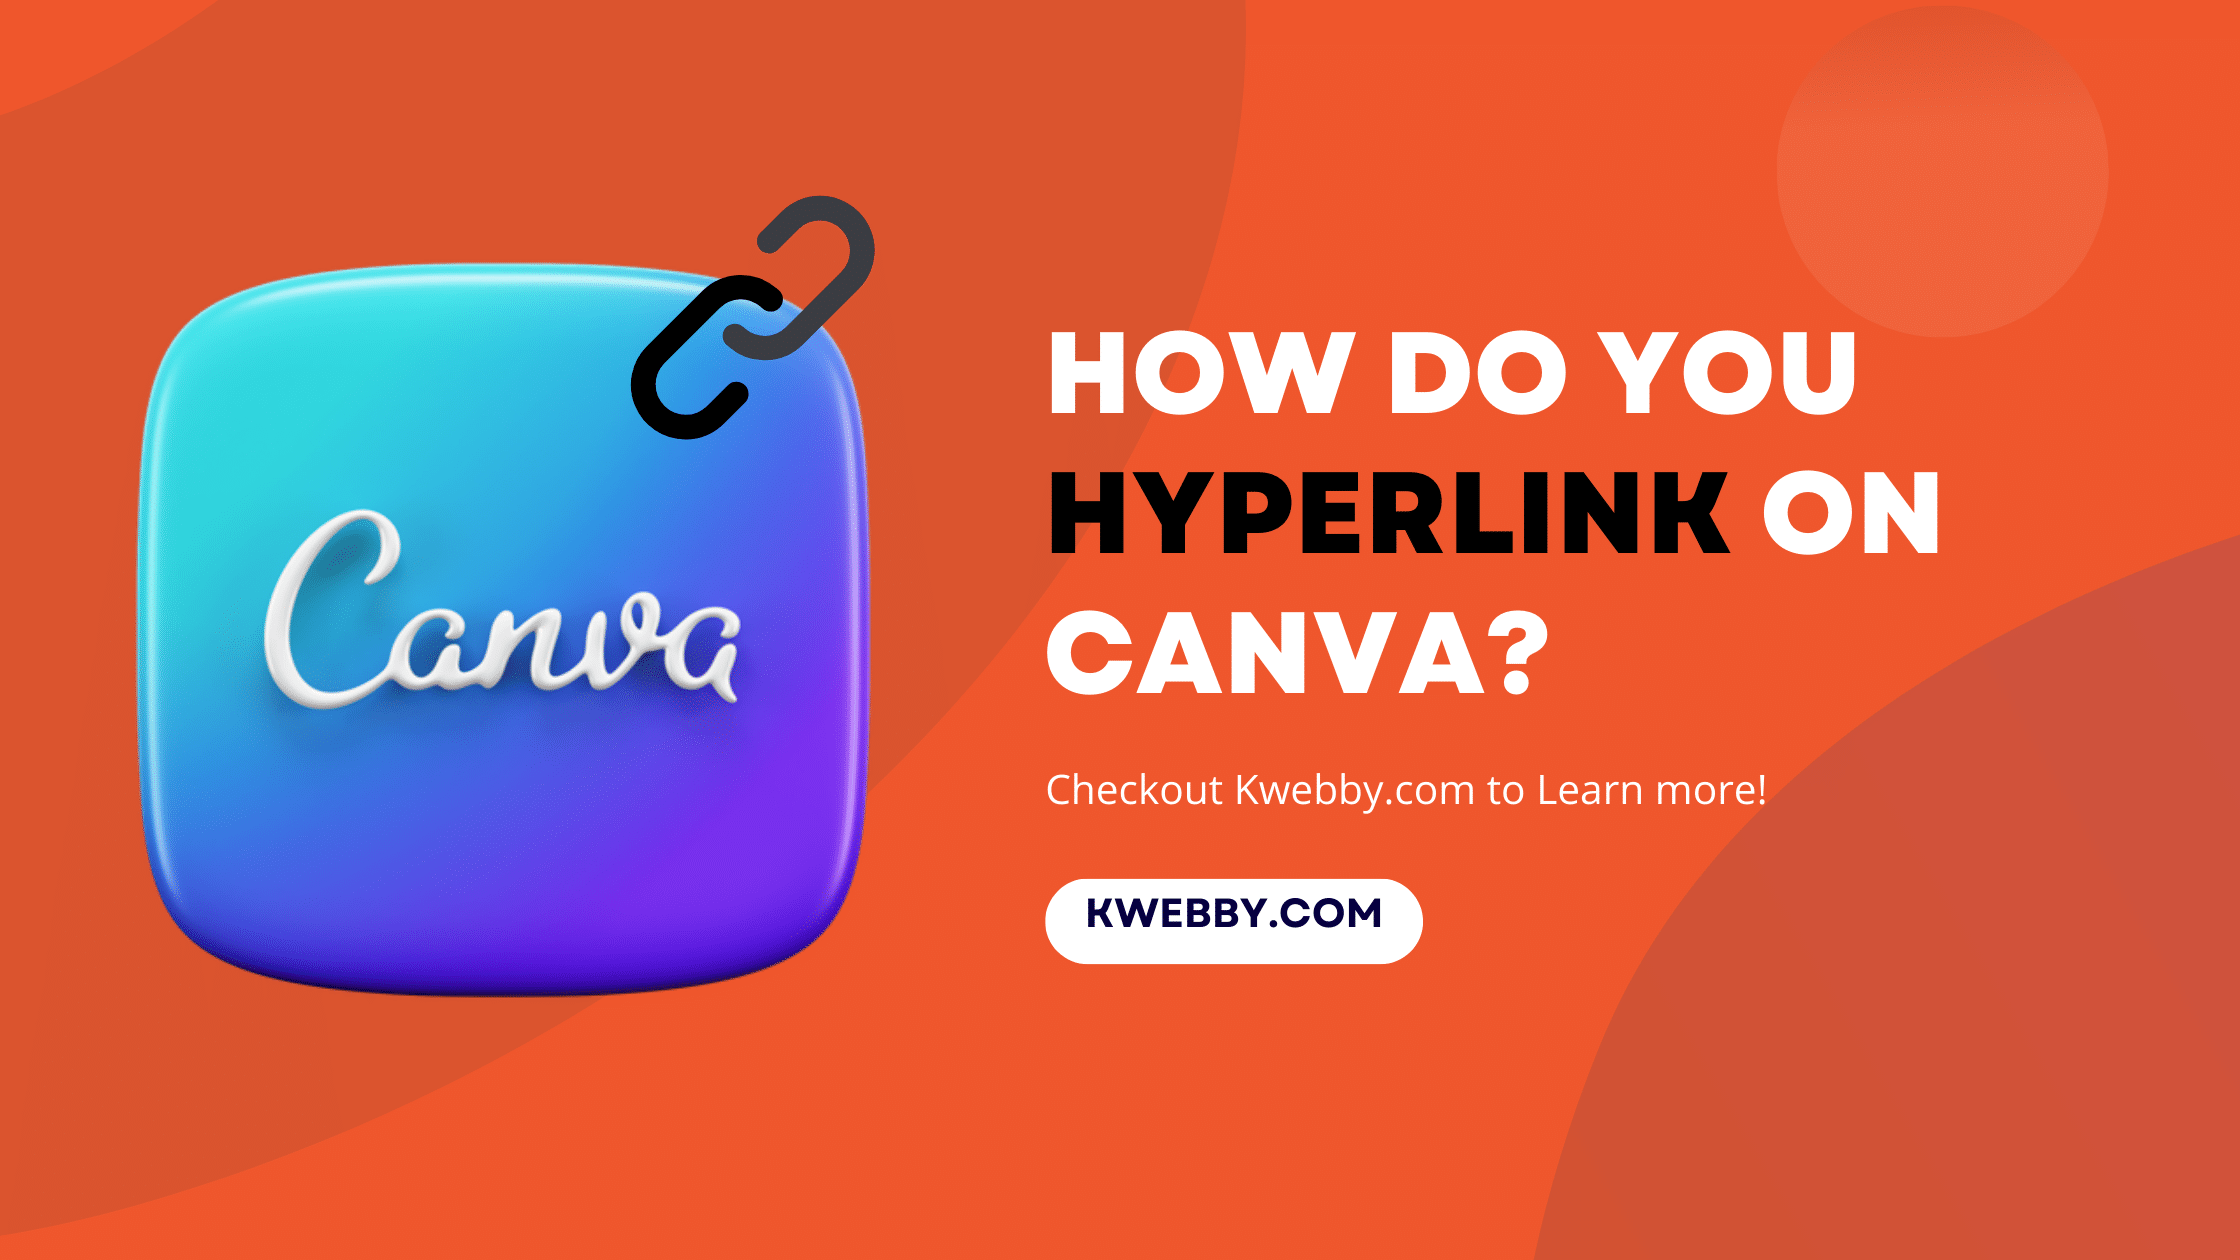 How Do You Hyperlink on Canva?